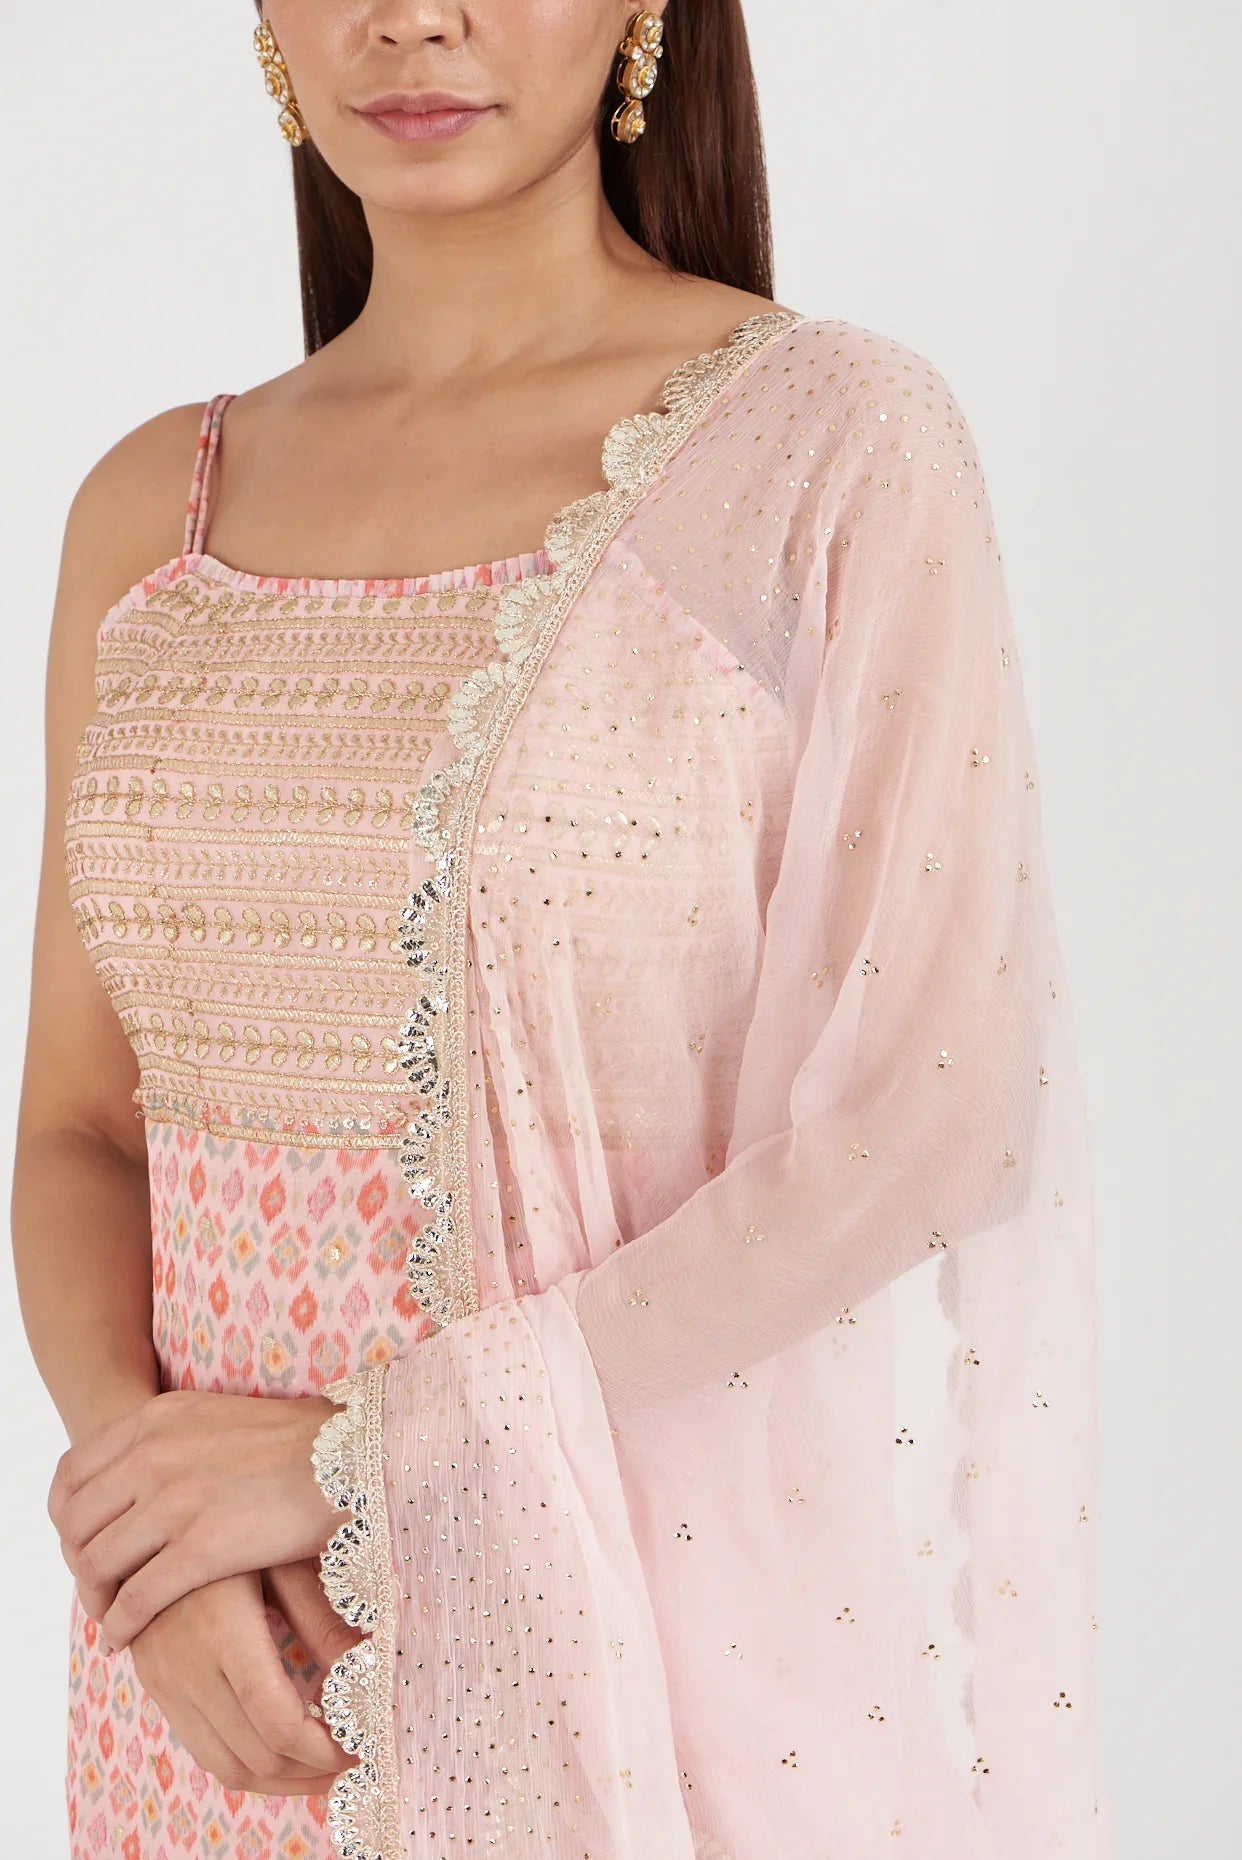 Georgette LUCKHNOWI GARARA / SHARARA DRESS at Rs 2100/piece in Surat | ID:  25679994748